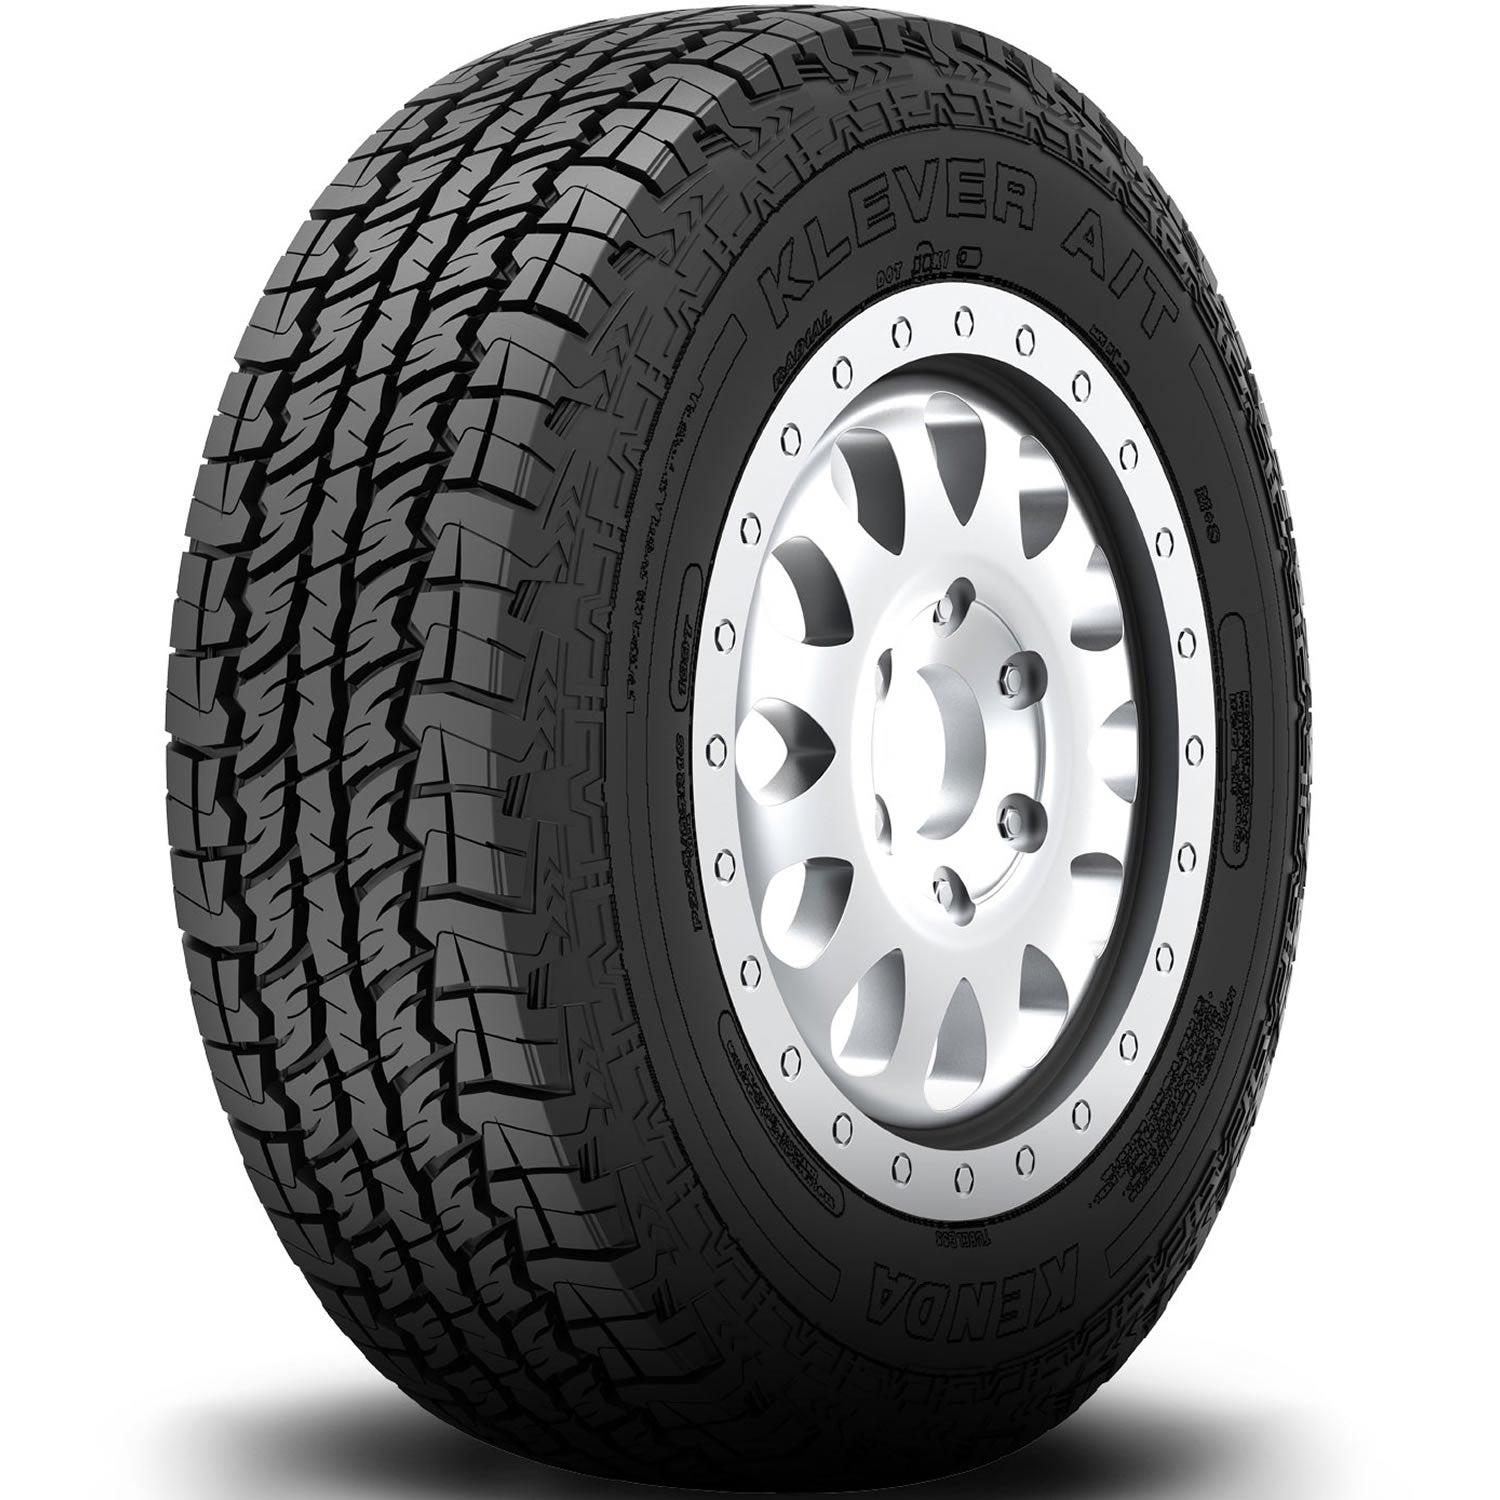 KENDA KLEVER AT P235/65R17 (29.1X9.4R 17) Tires